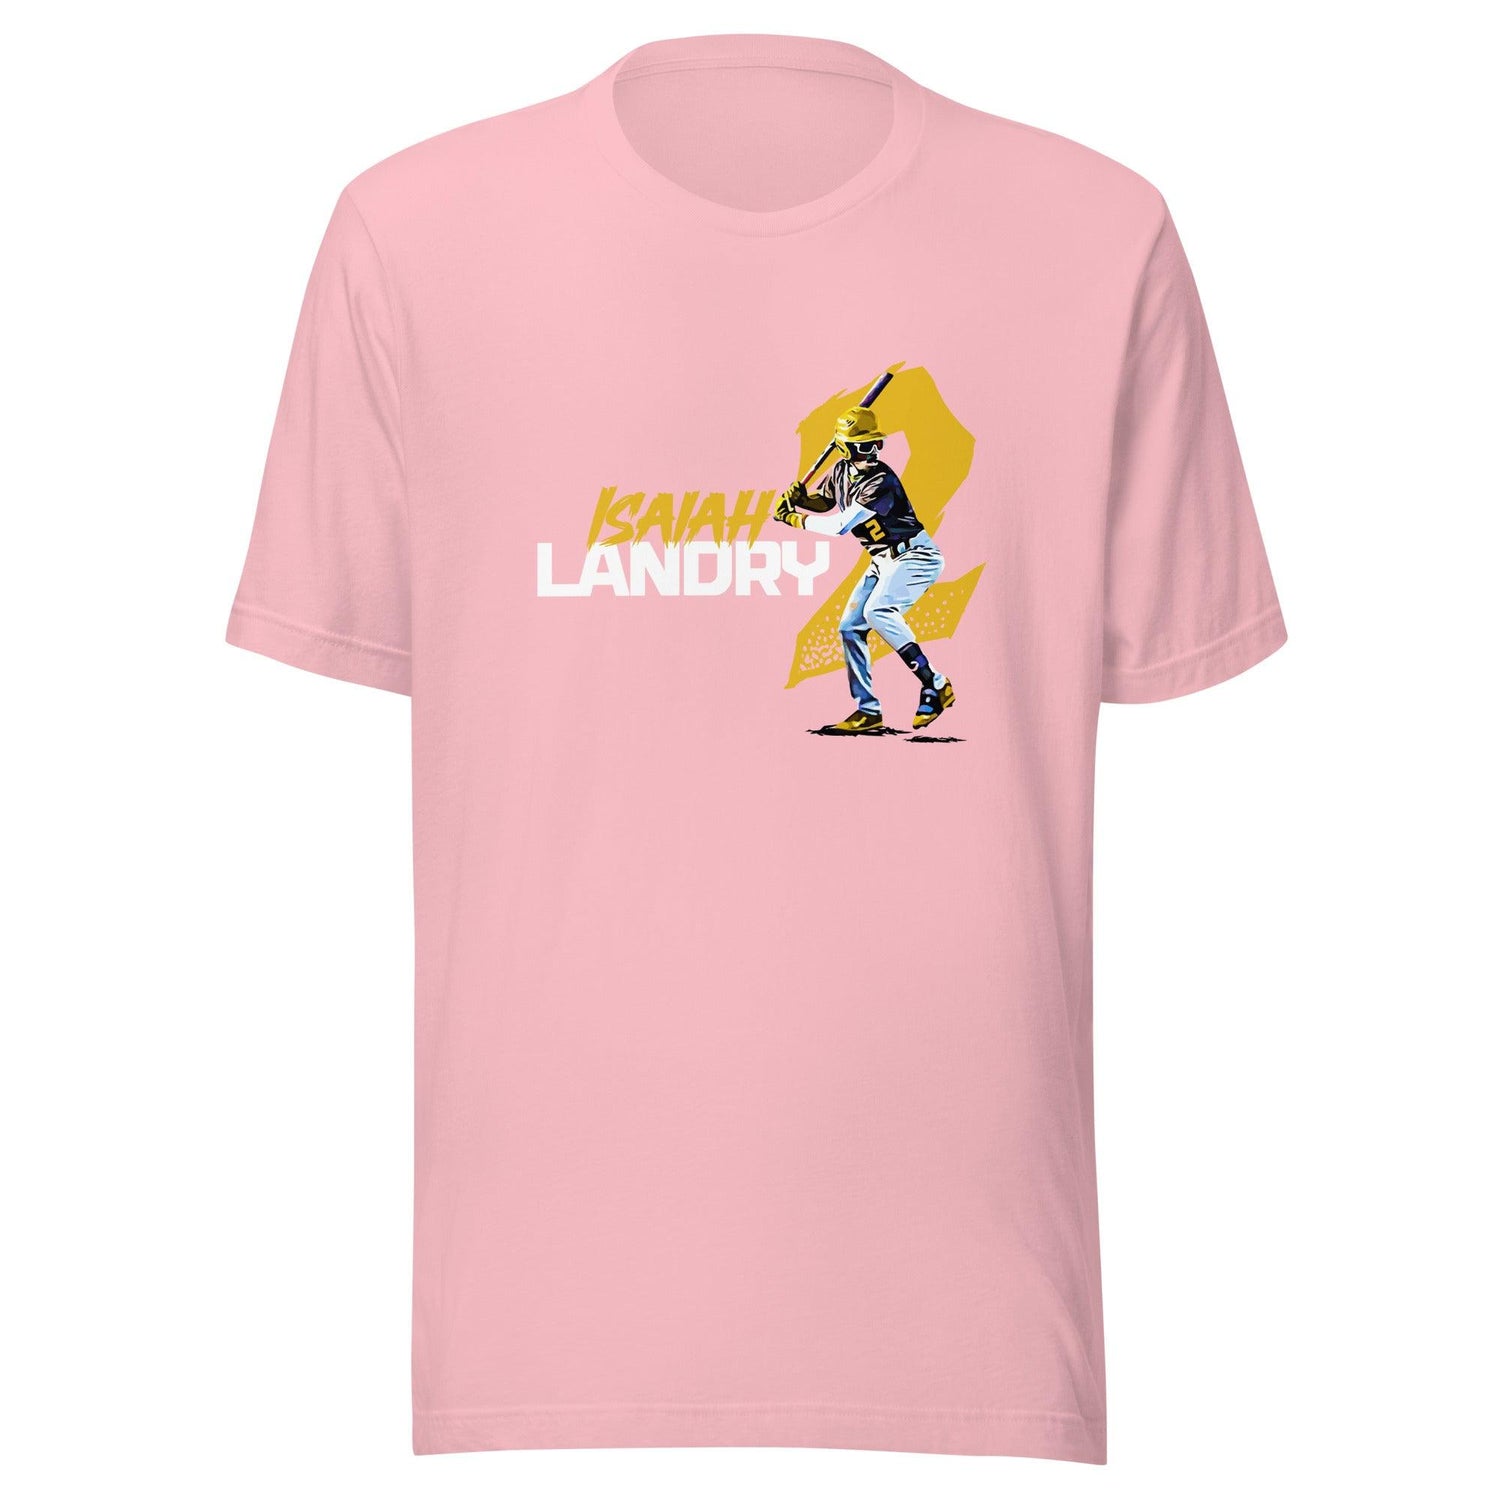 Isaiah Landry "Gameday" t-shirt - Fan Arch